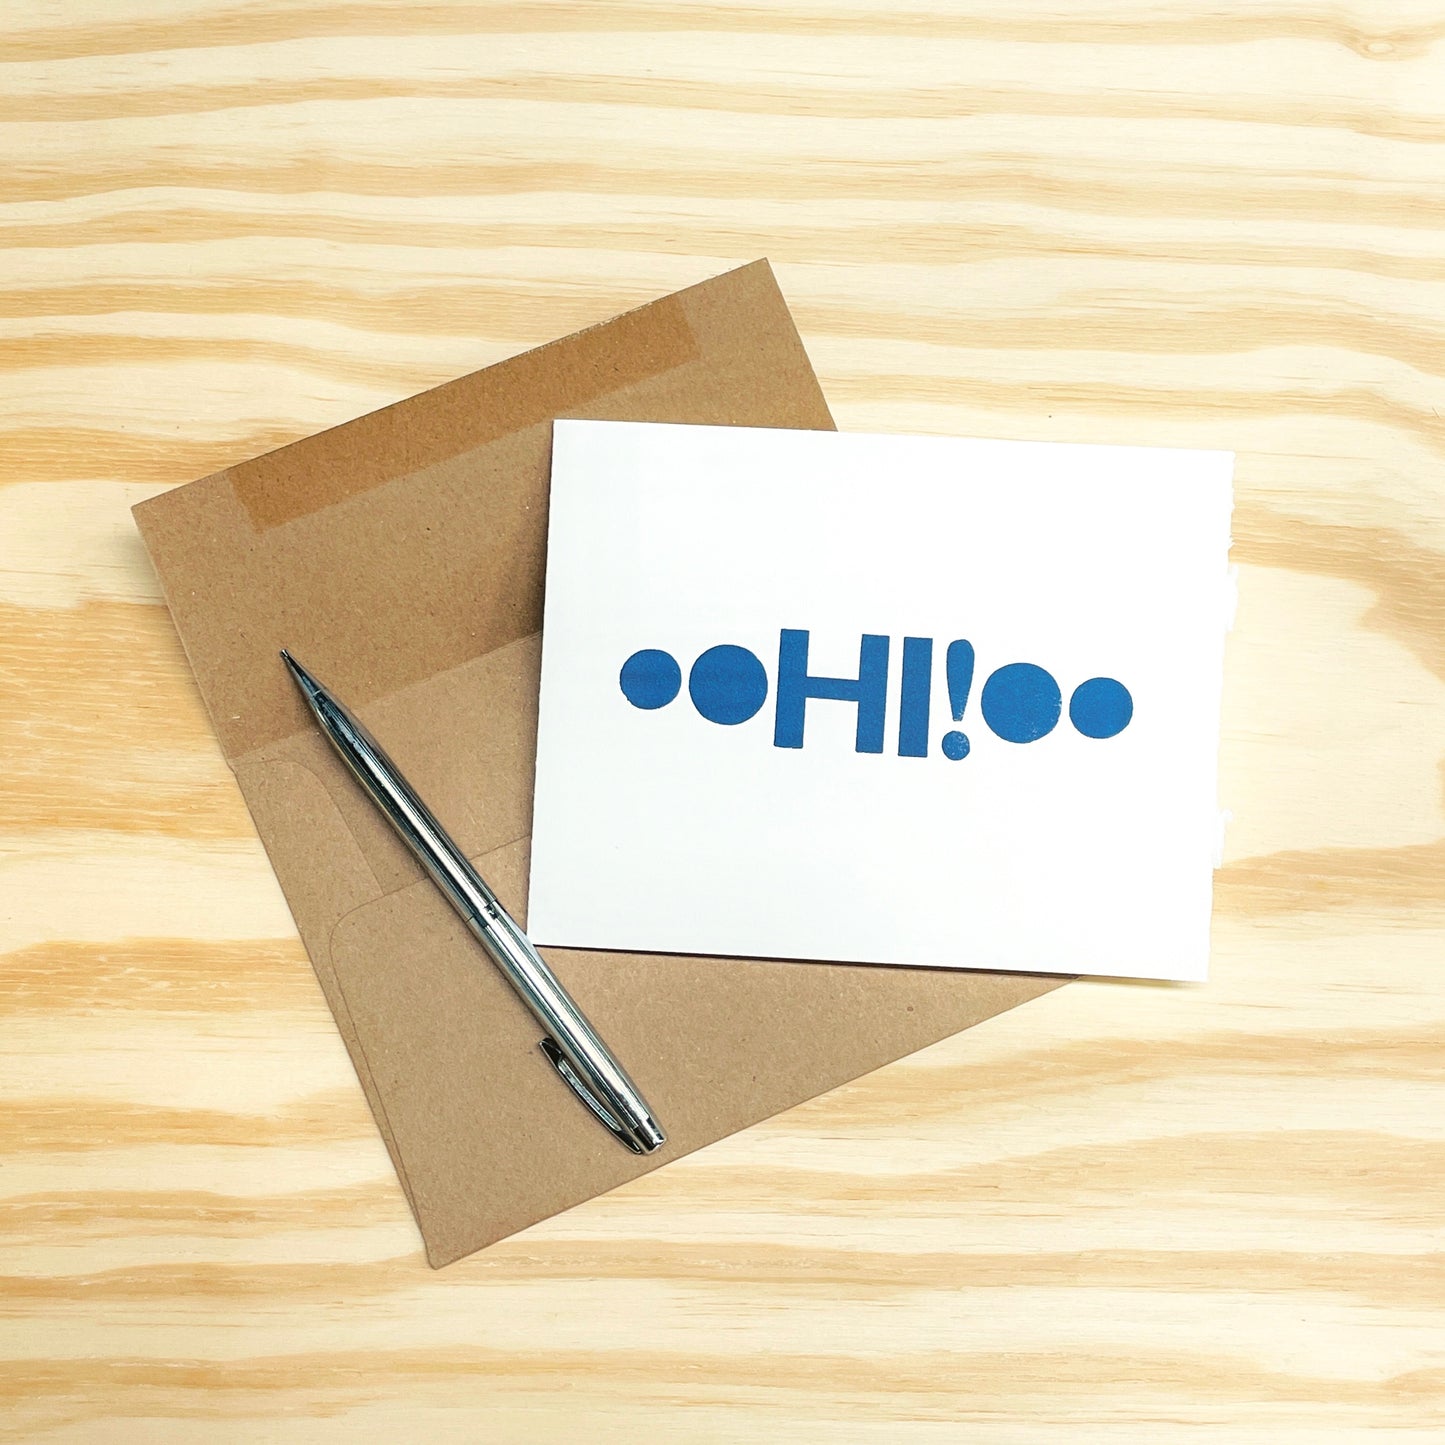 HI! Dots Blue single card - wood type letterpress printed